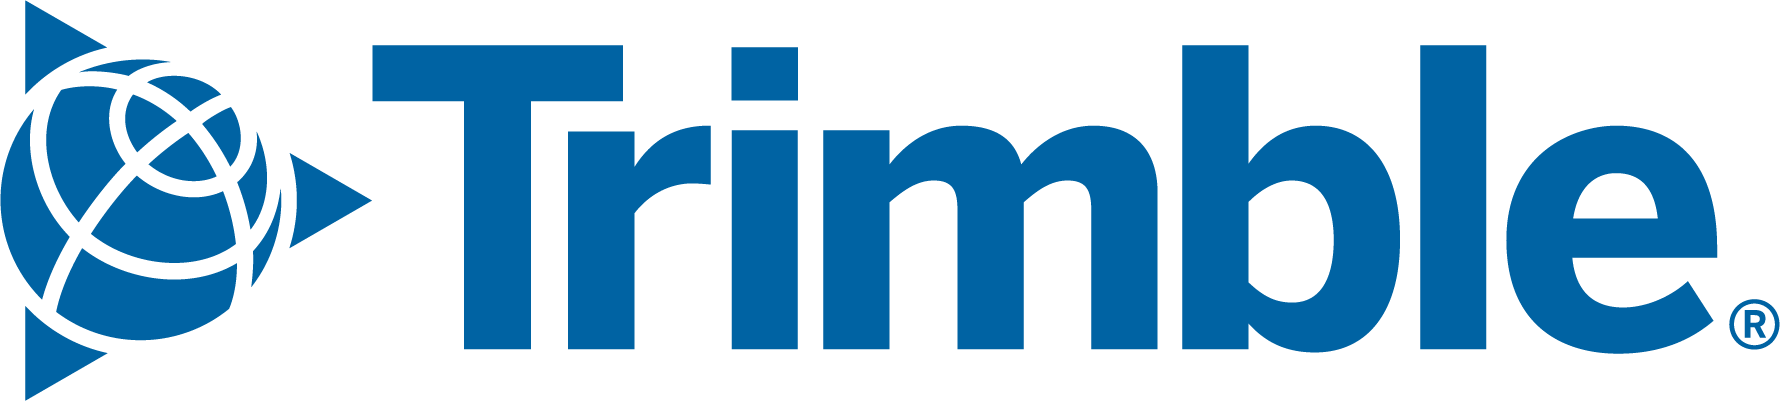 Trimble Solutions Sea Pte. Ltd. company logo